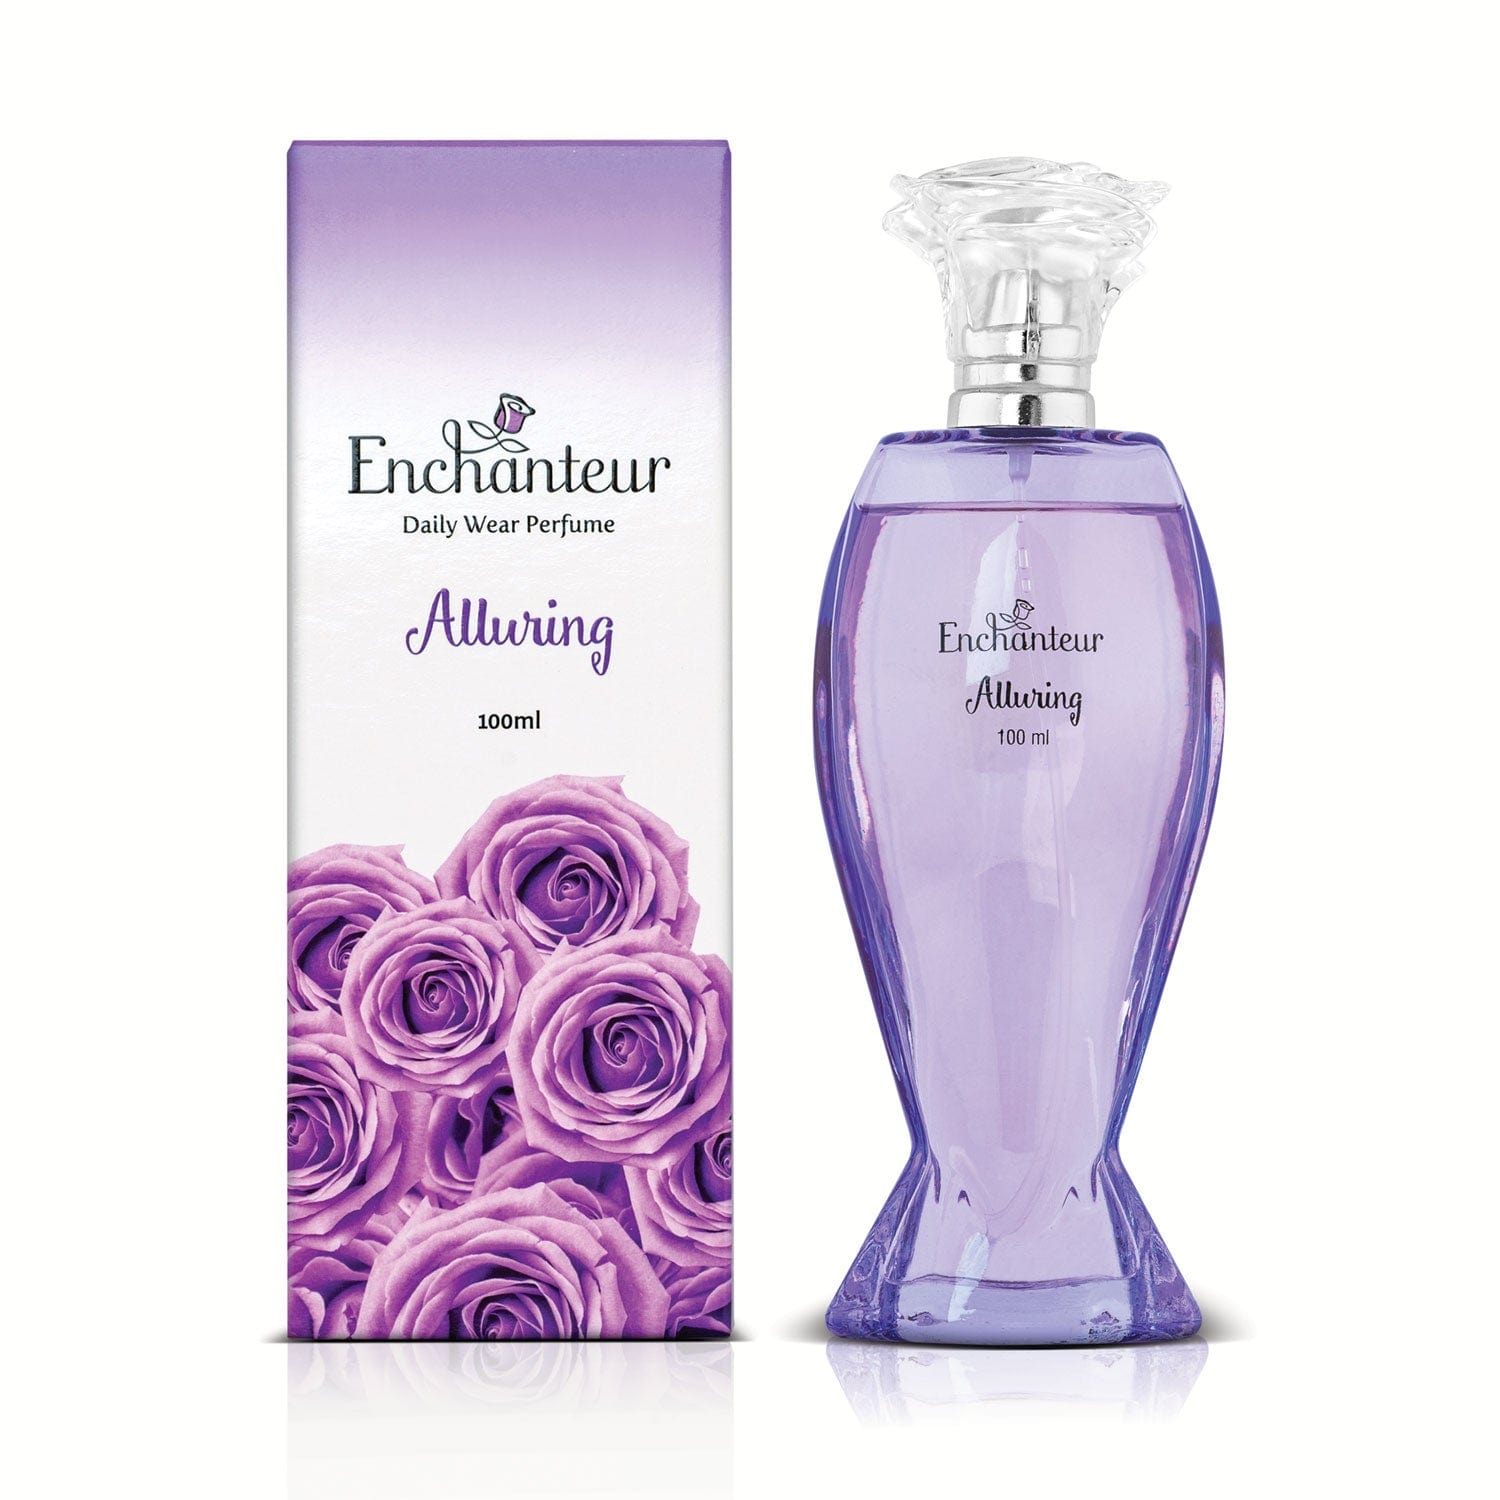 Enchanteur Alluring Daily wear Perfume for Women, 100ml By Enchanteur